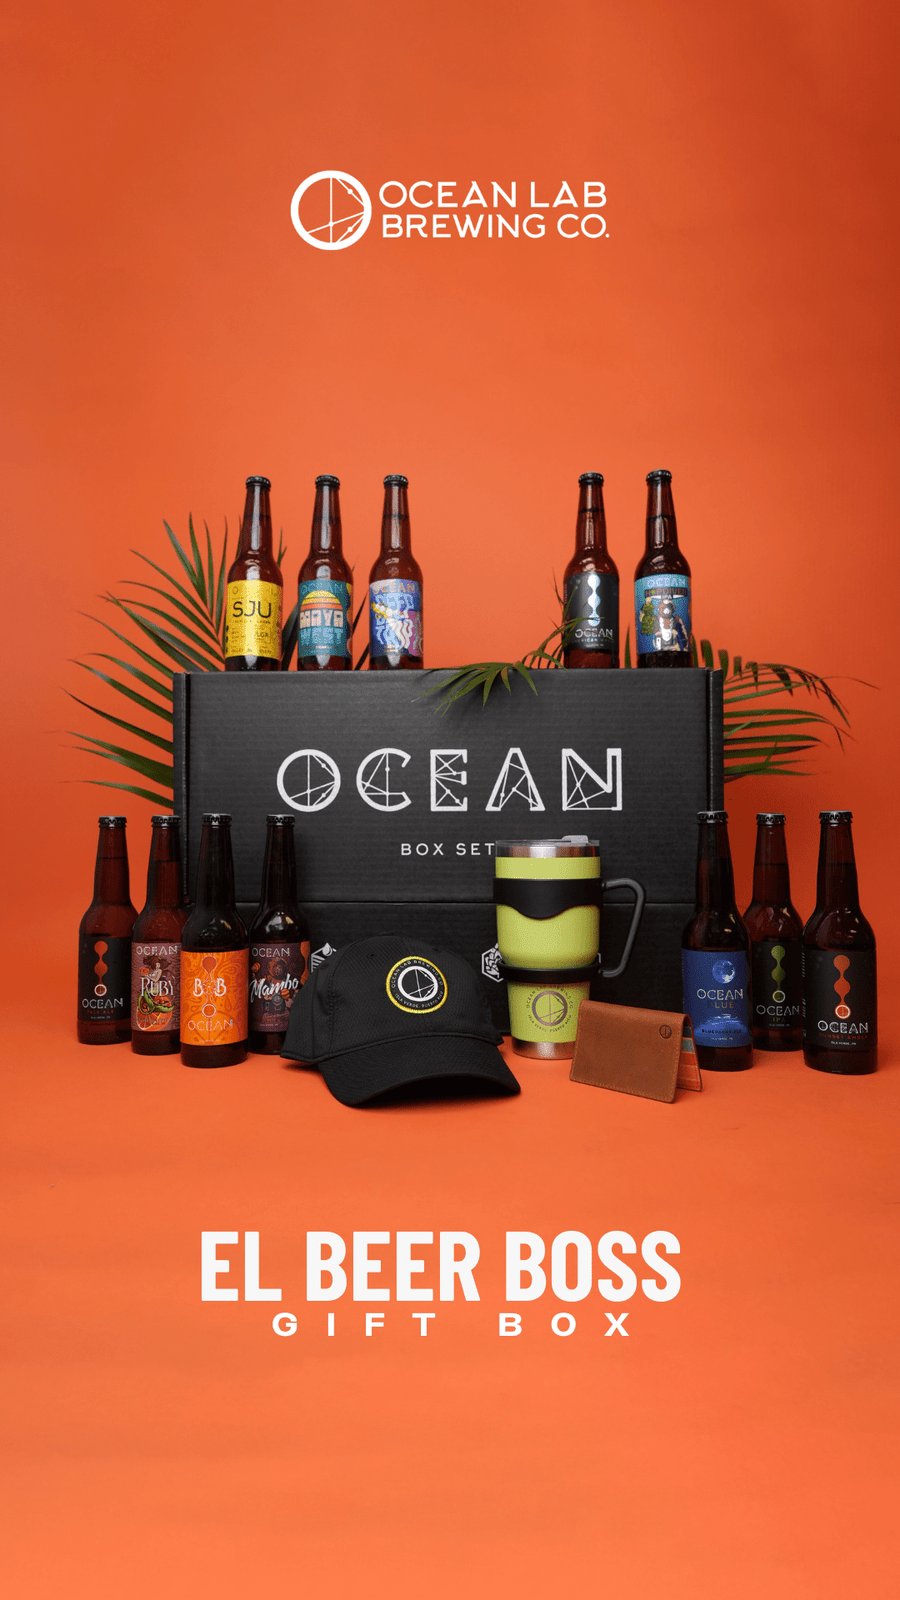 El Beer Boss Gift Box